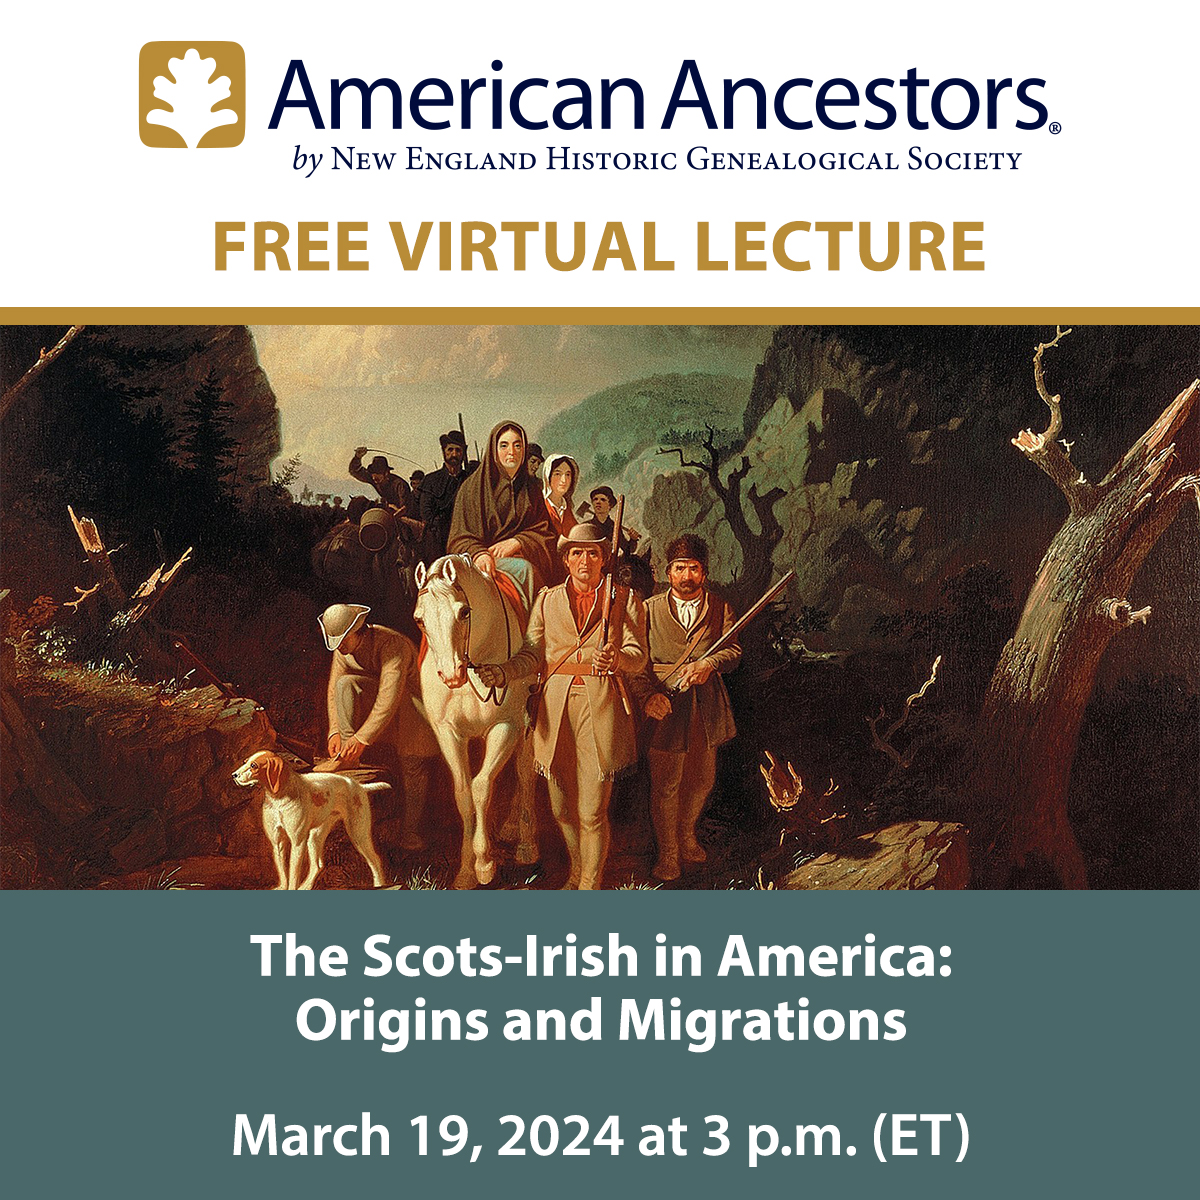 The Scots-Irish in America social